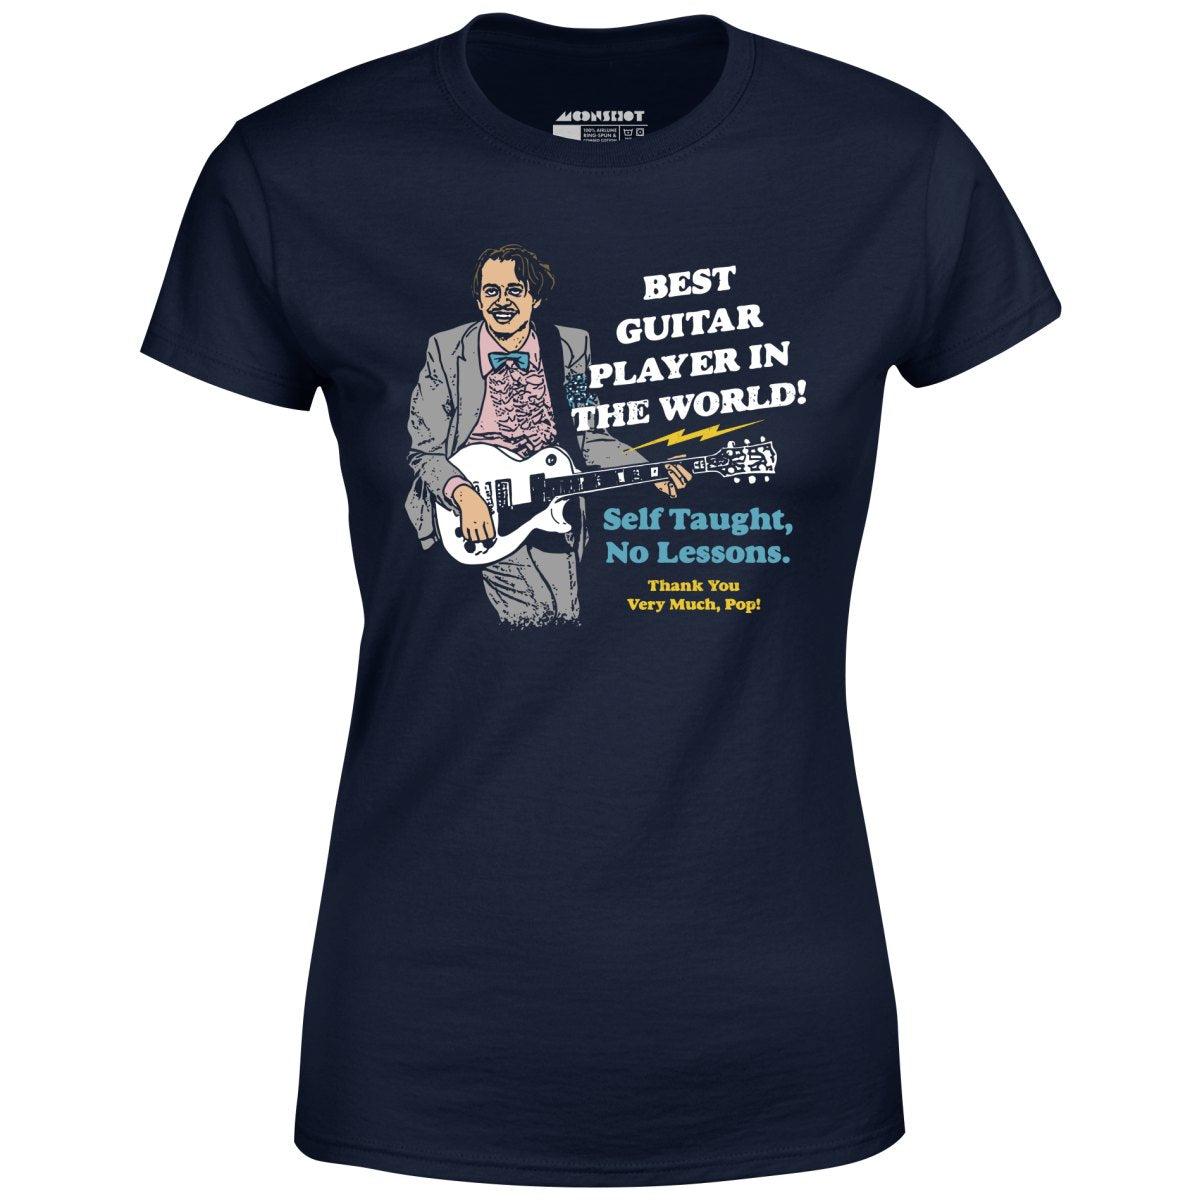 Best Guitar Player in The World! - Women's T-Shirt